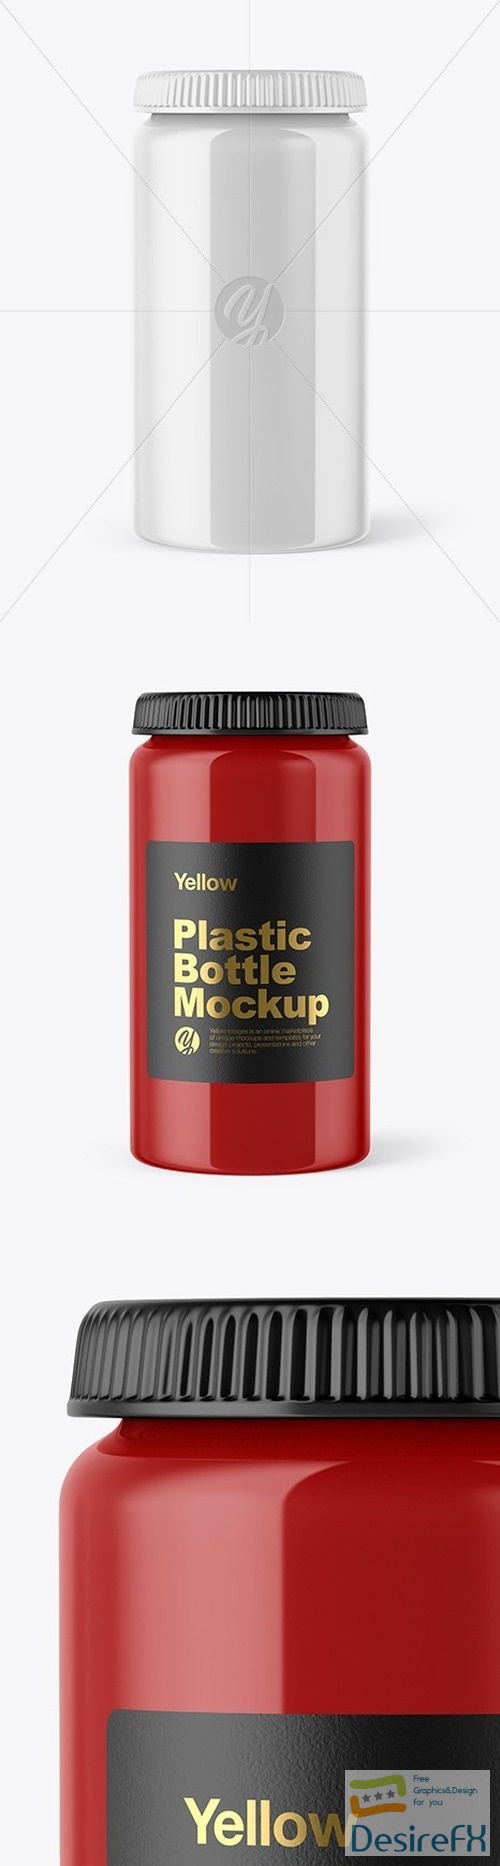 Glossy Plastic Bottle Mockup 46824